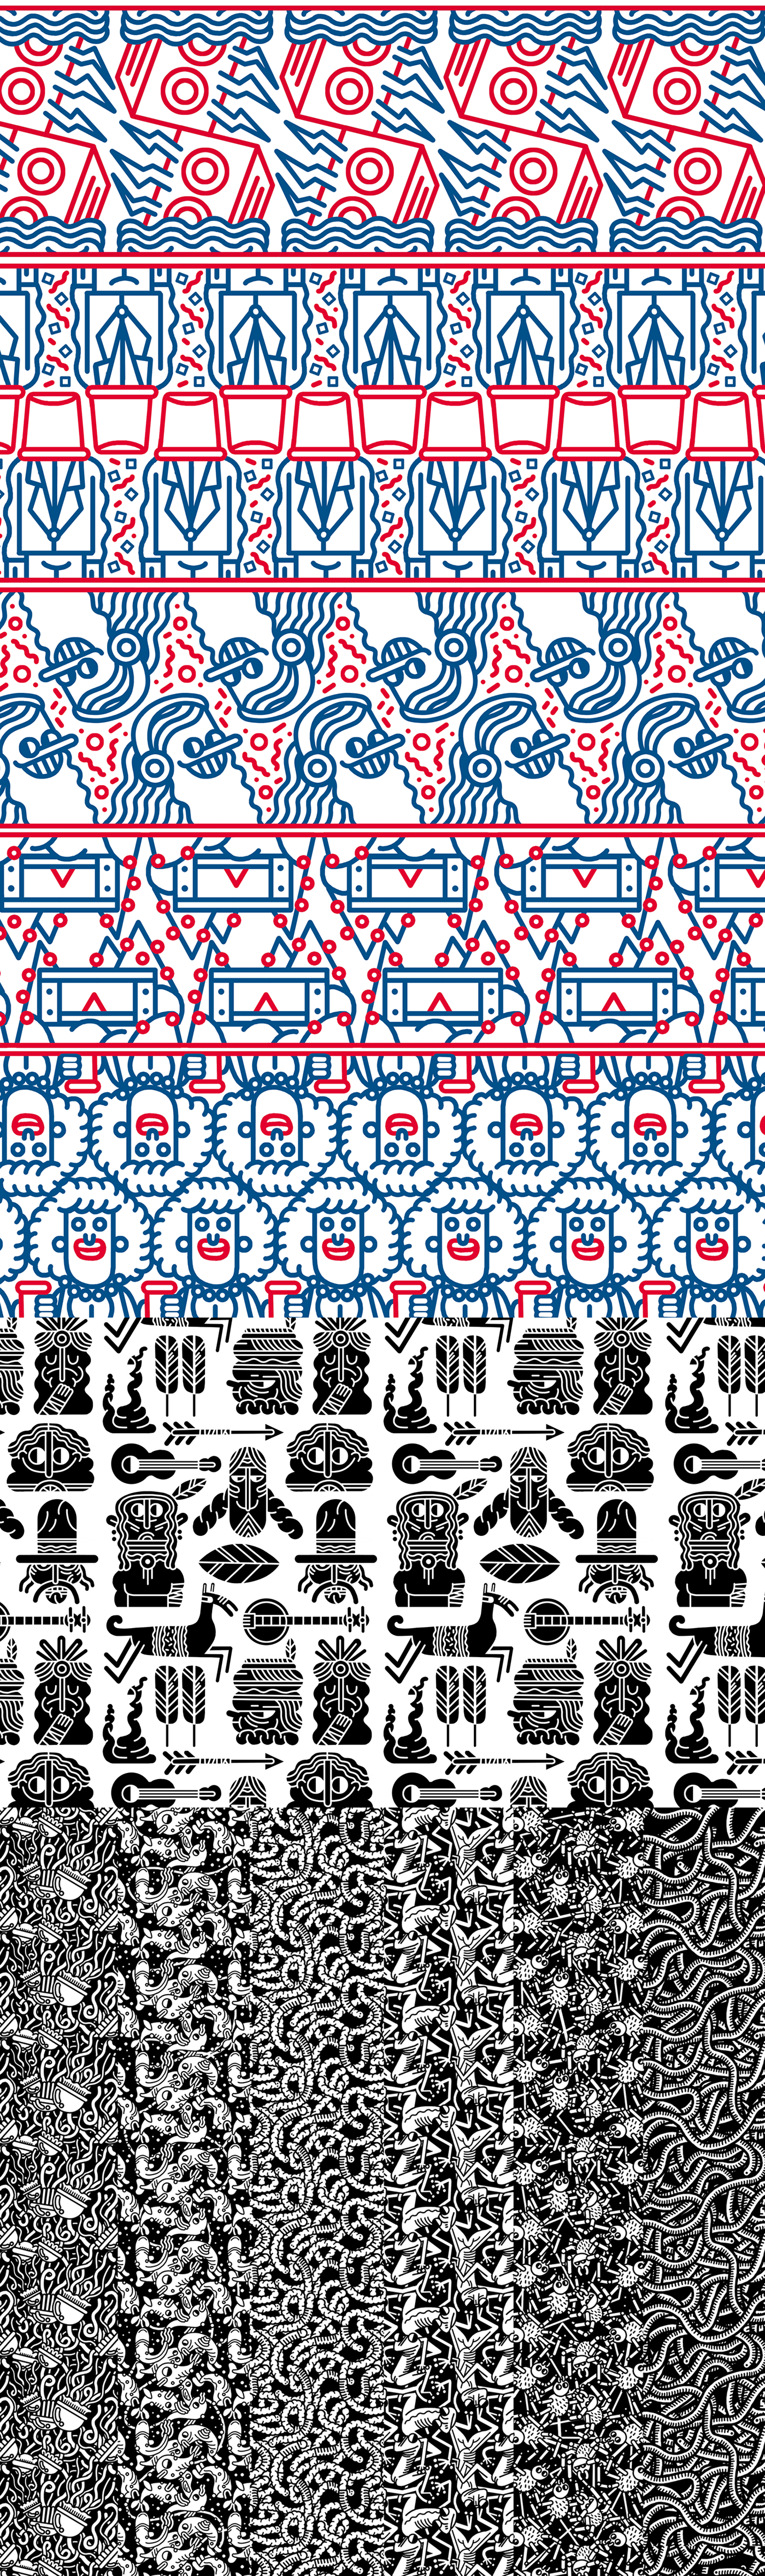 patron pattern textil moda ilustracion